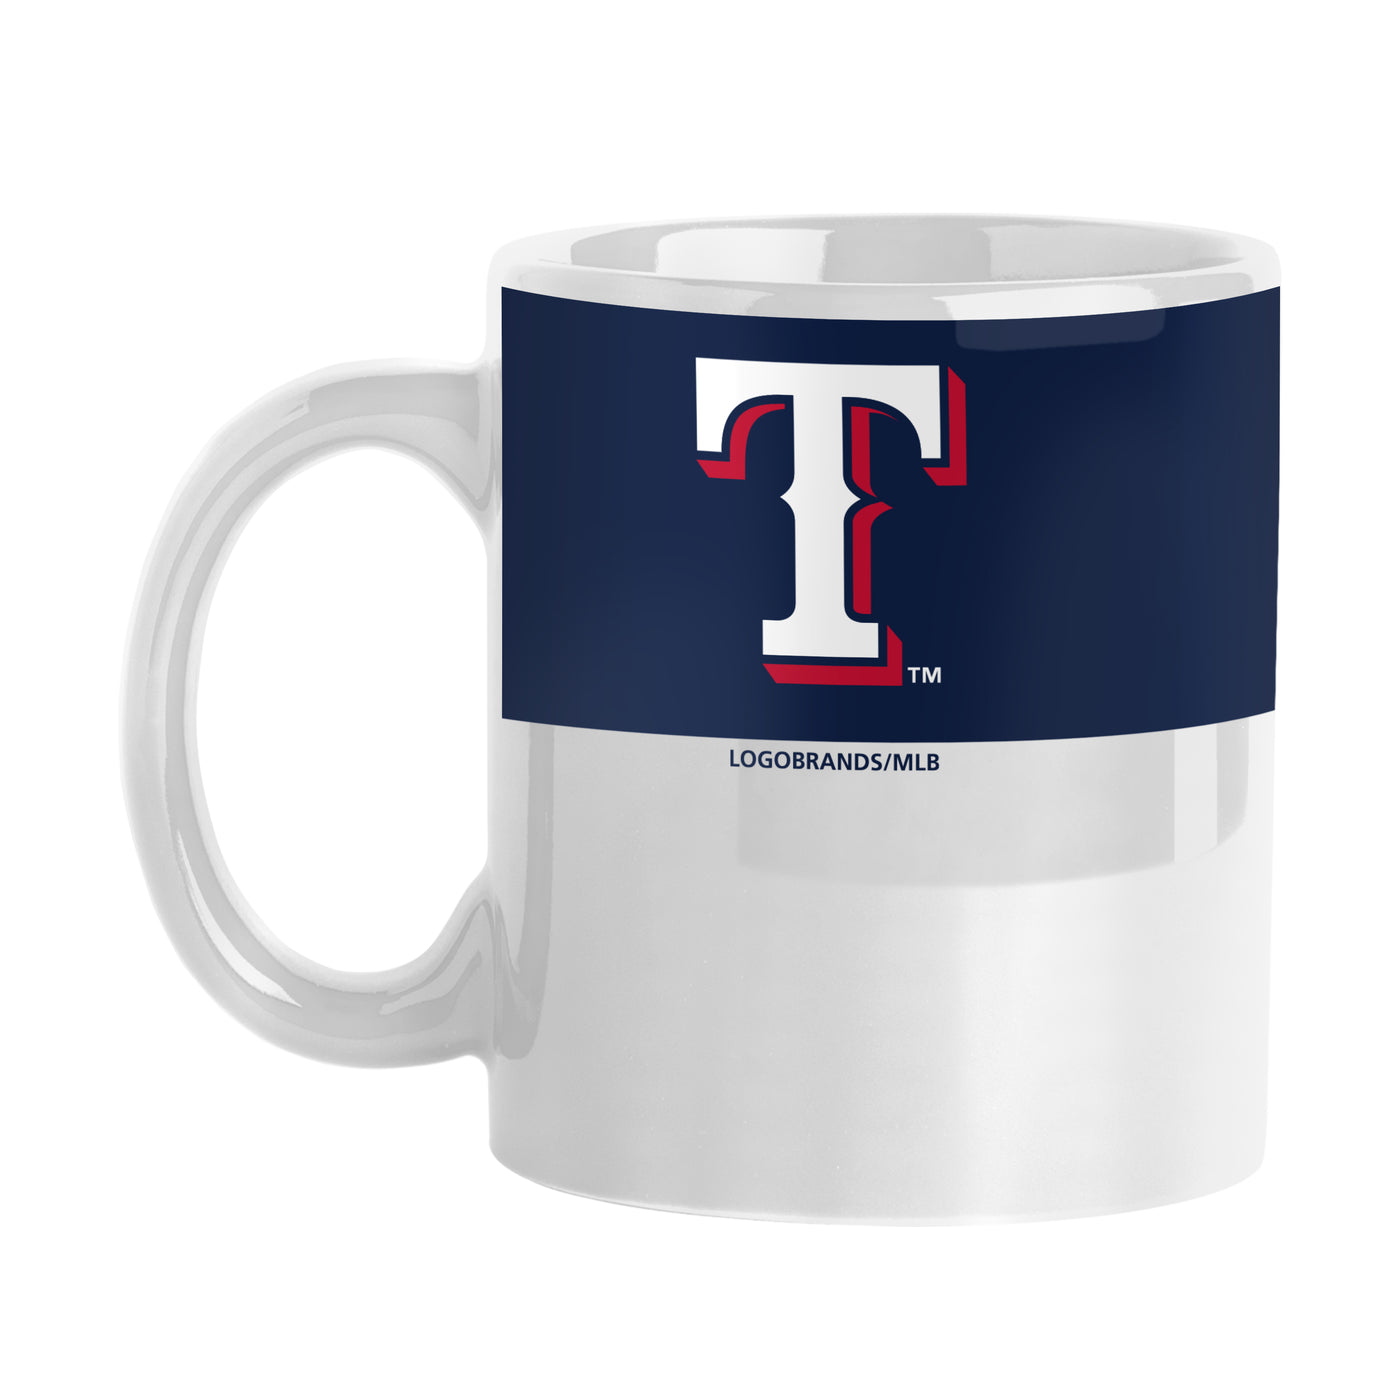 Texas Rangers 11oz Colorblock Sublimated Mug